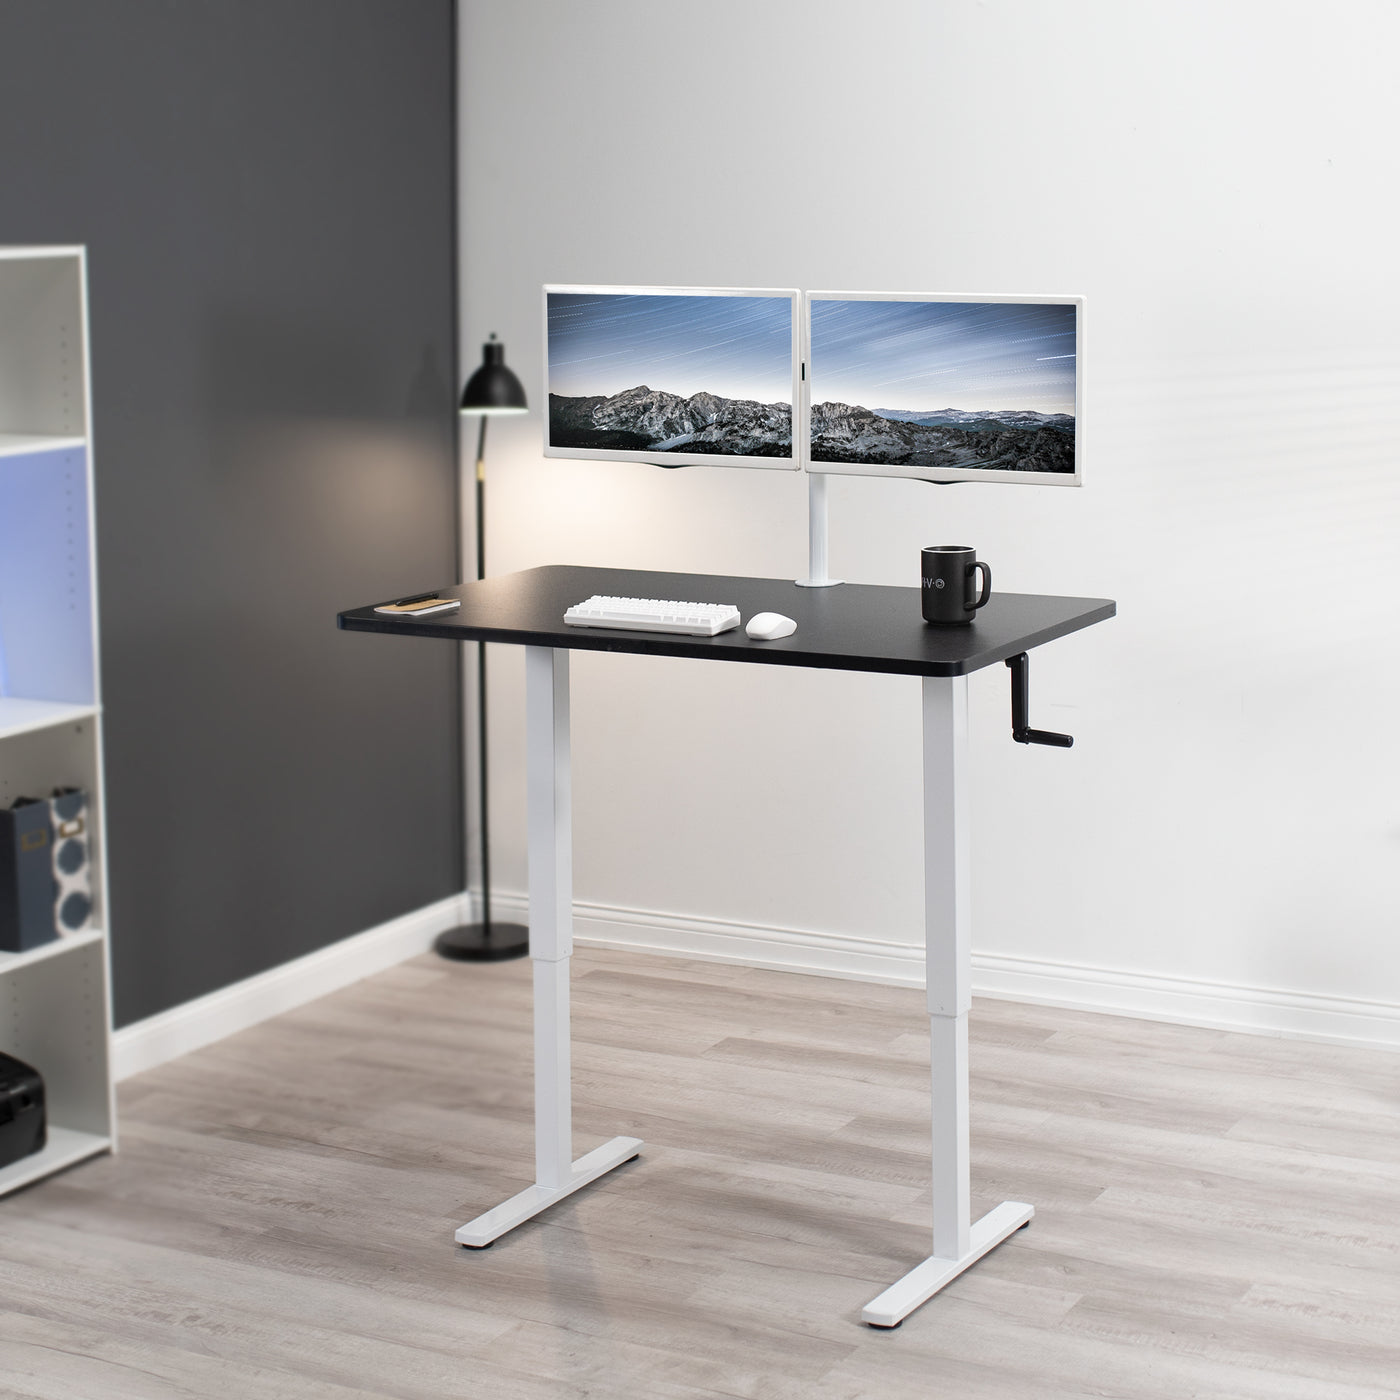 Manual hand crank height adjustable desk for sit or stand active workstation.